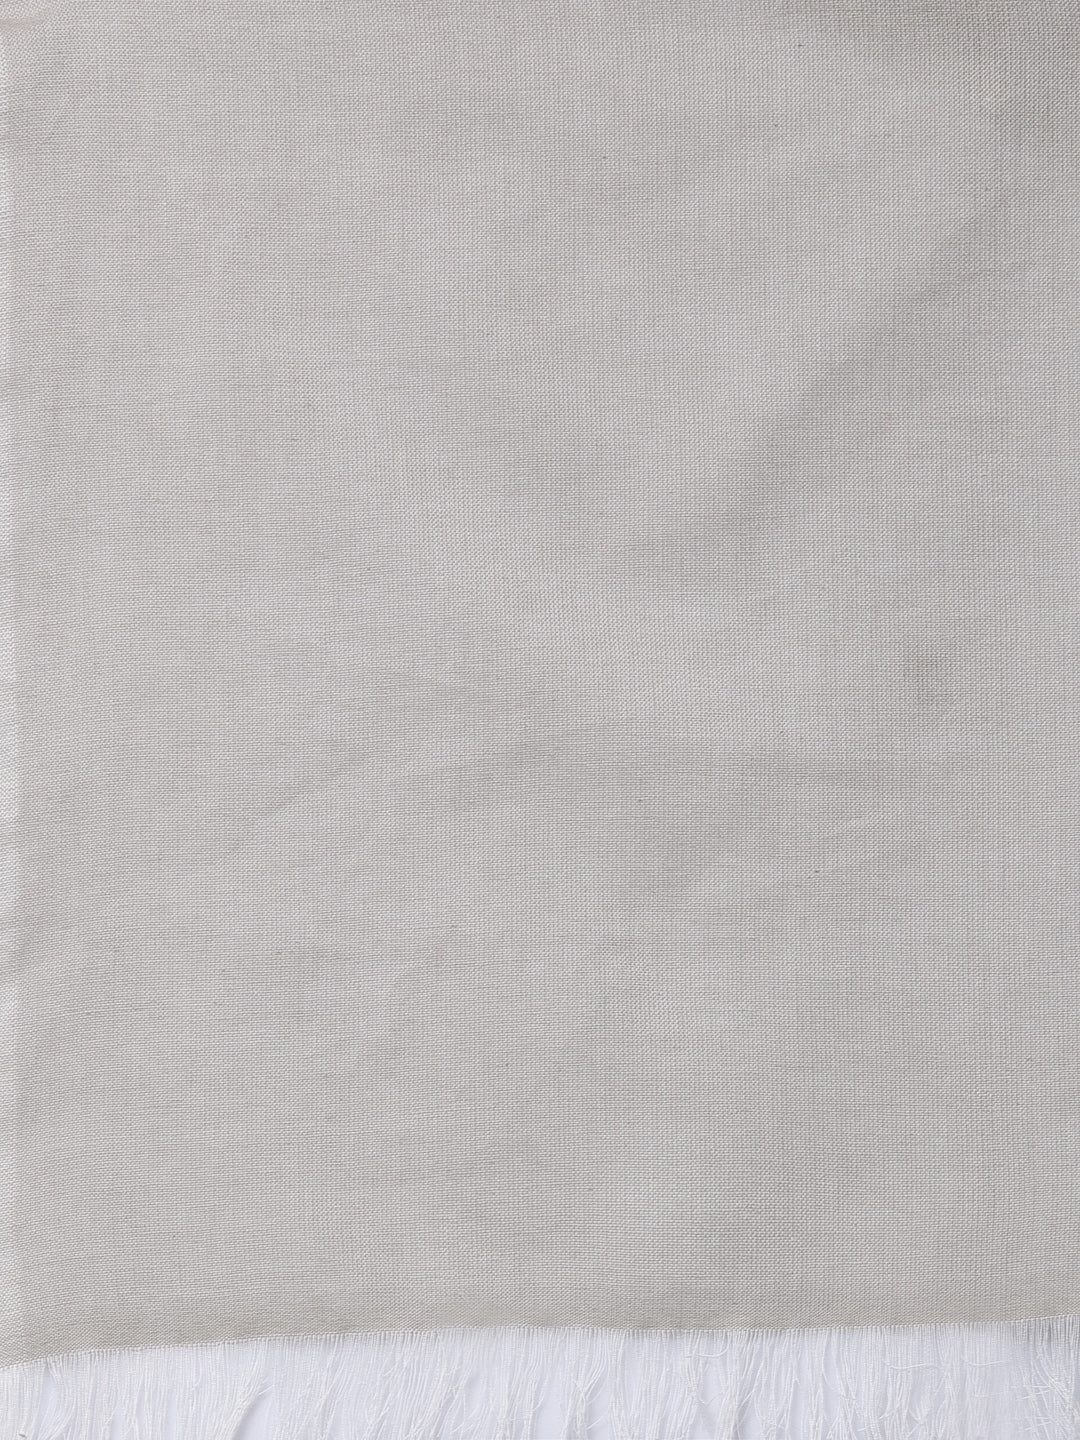 Arrabi Grey Solid Handwoven Cotton Full Size Stole (185 x 85 cm)